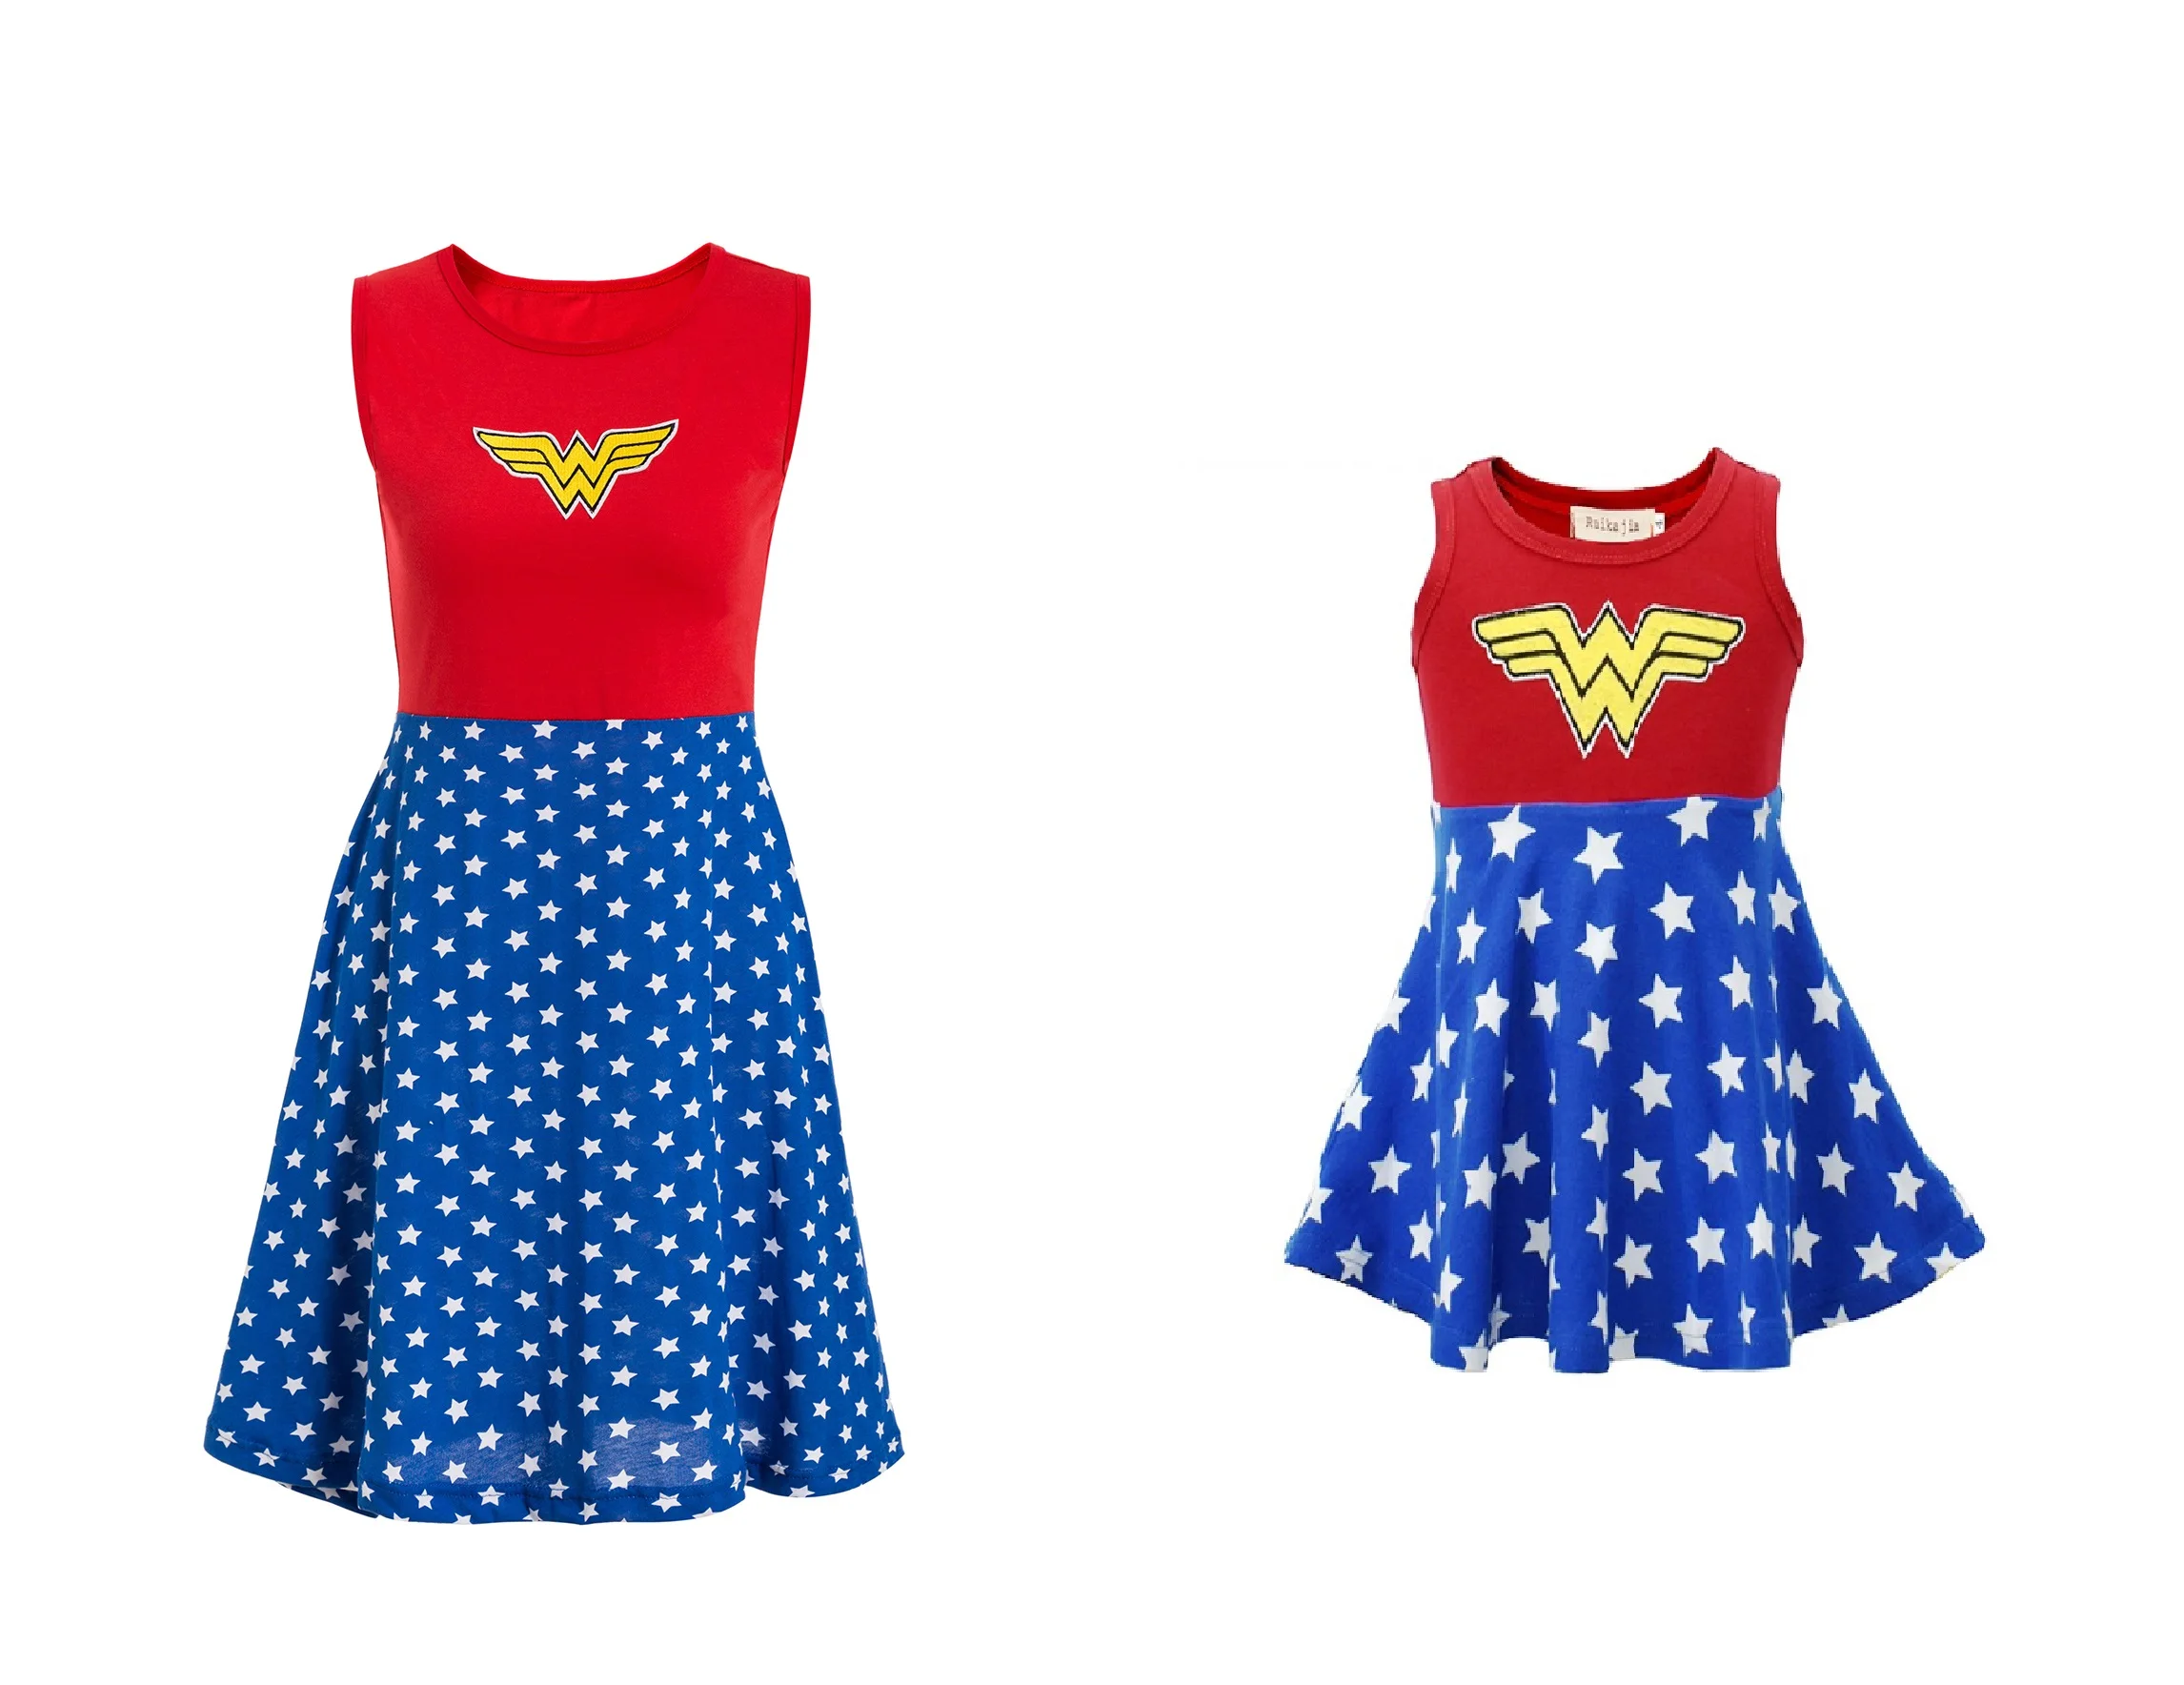 Wonder Woman Womens Costume